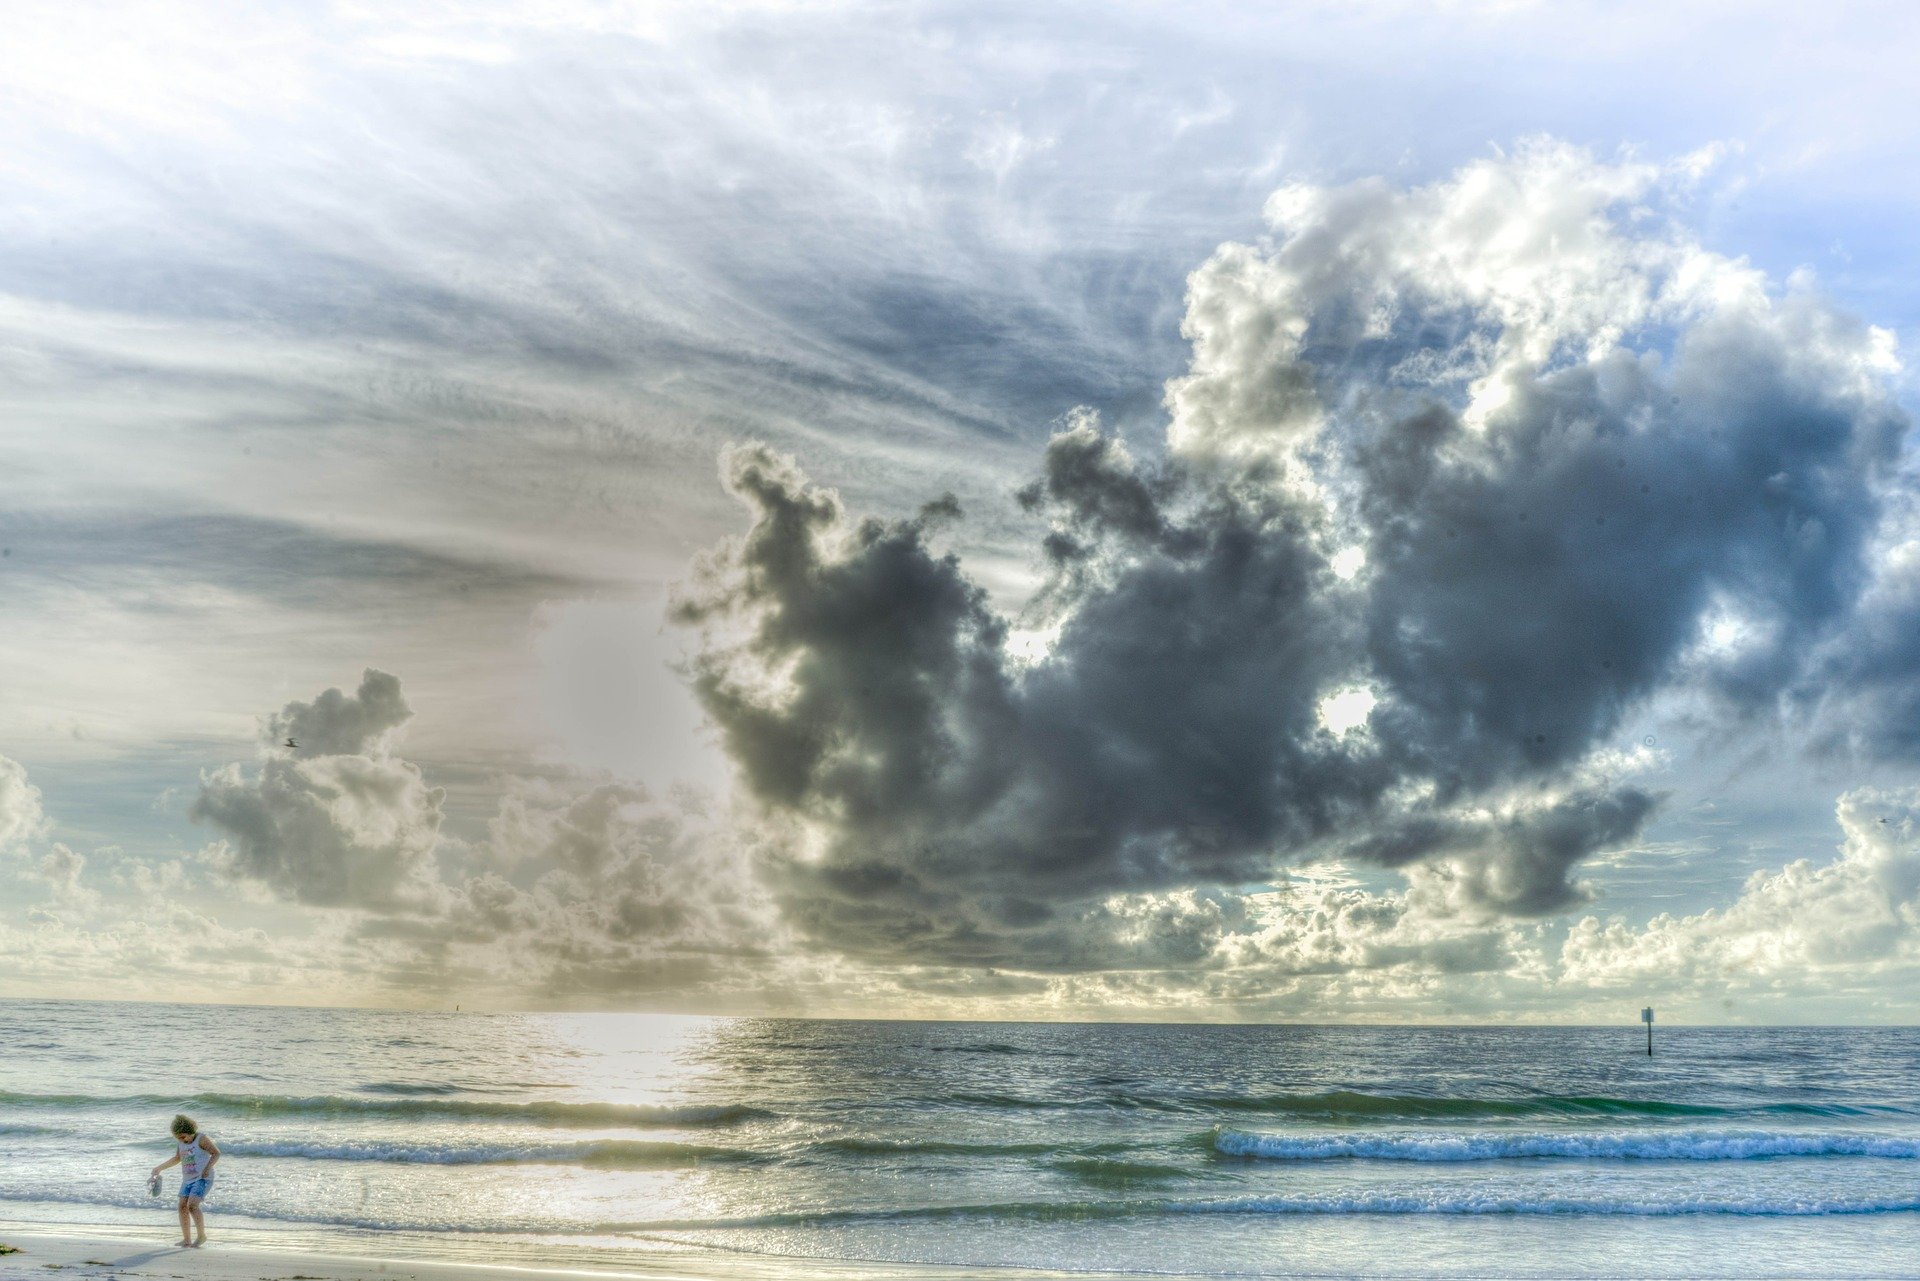 Clearwater beach, Florida | Source: Pixabay